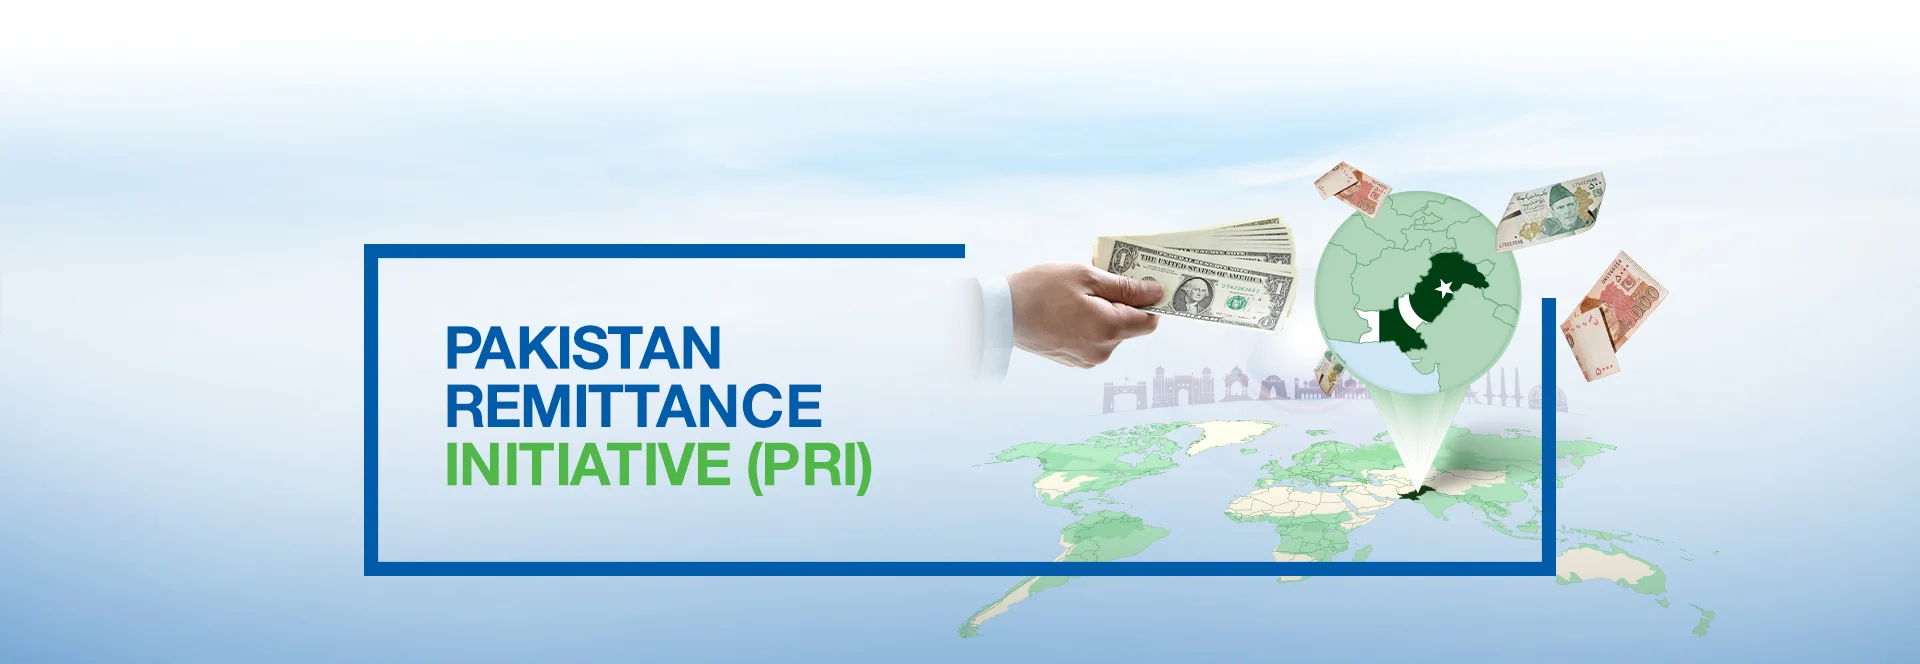 Pakistan Remittance Initiative (PRI)